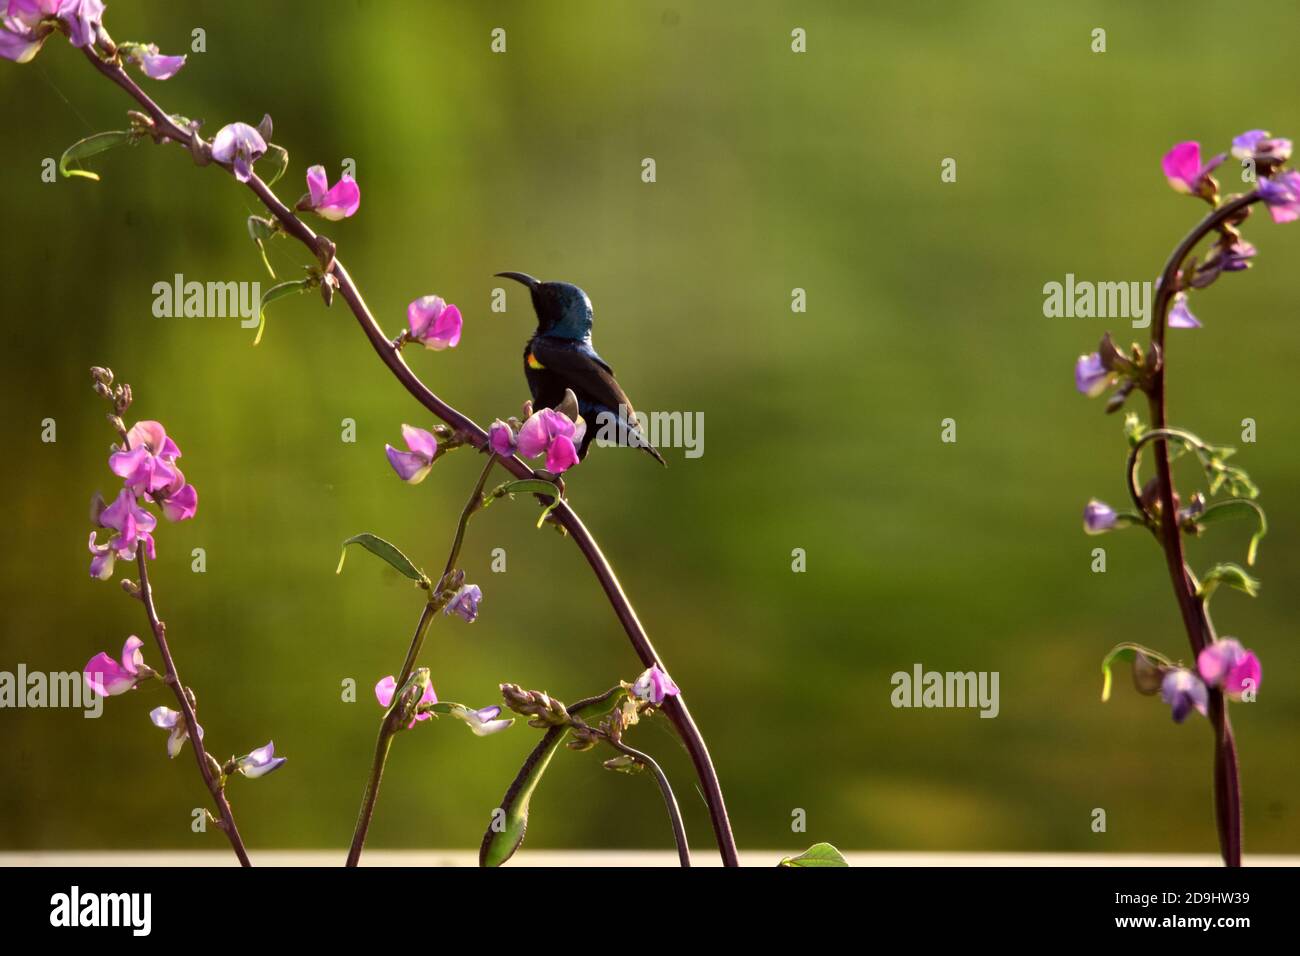 Loten's sunbird enjoying its nectar off the purple flower.. Stock Photo